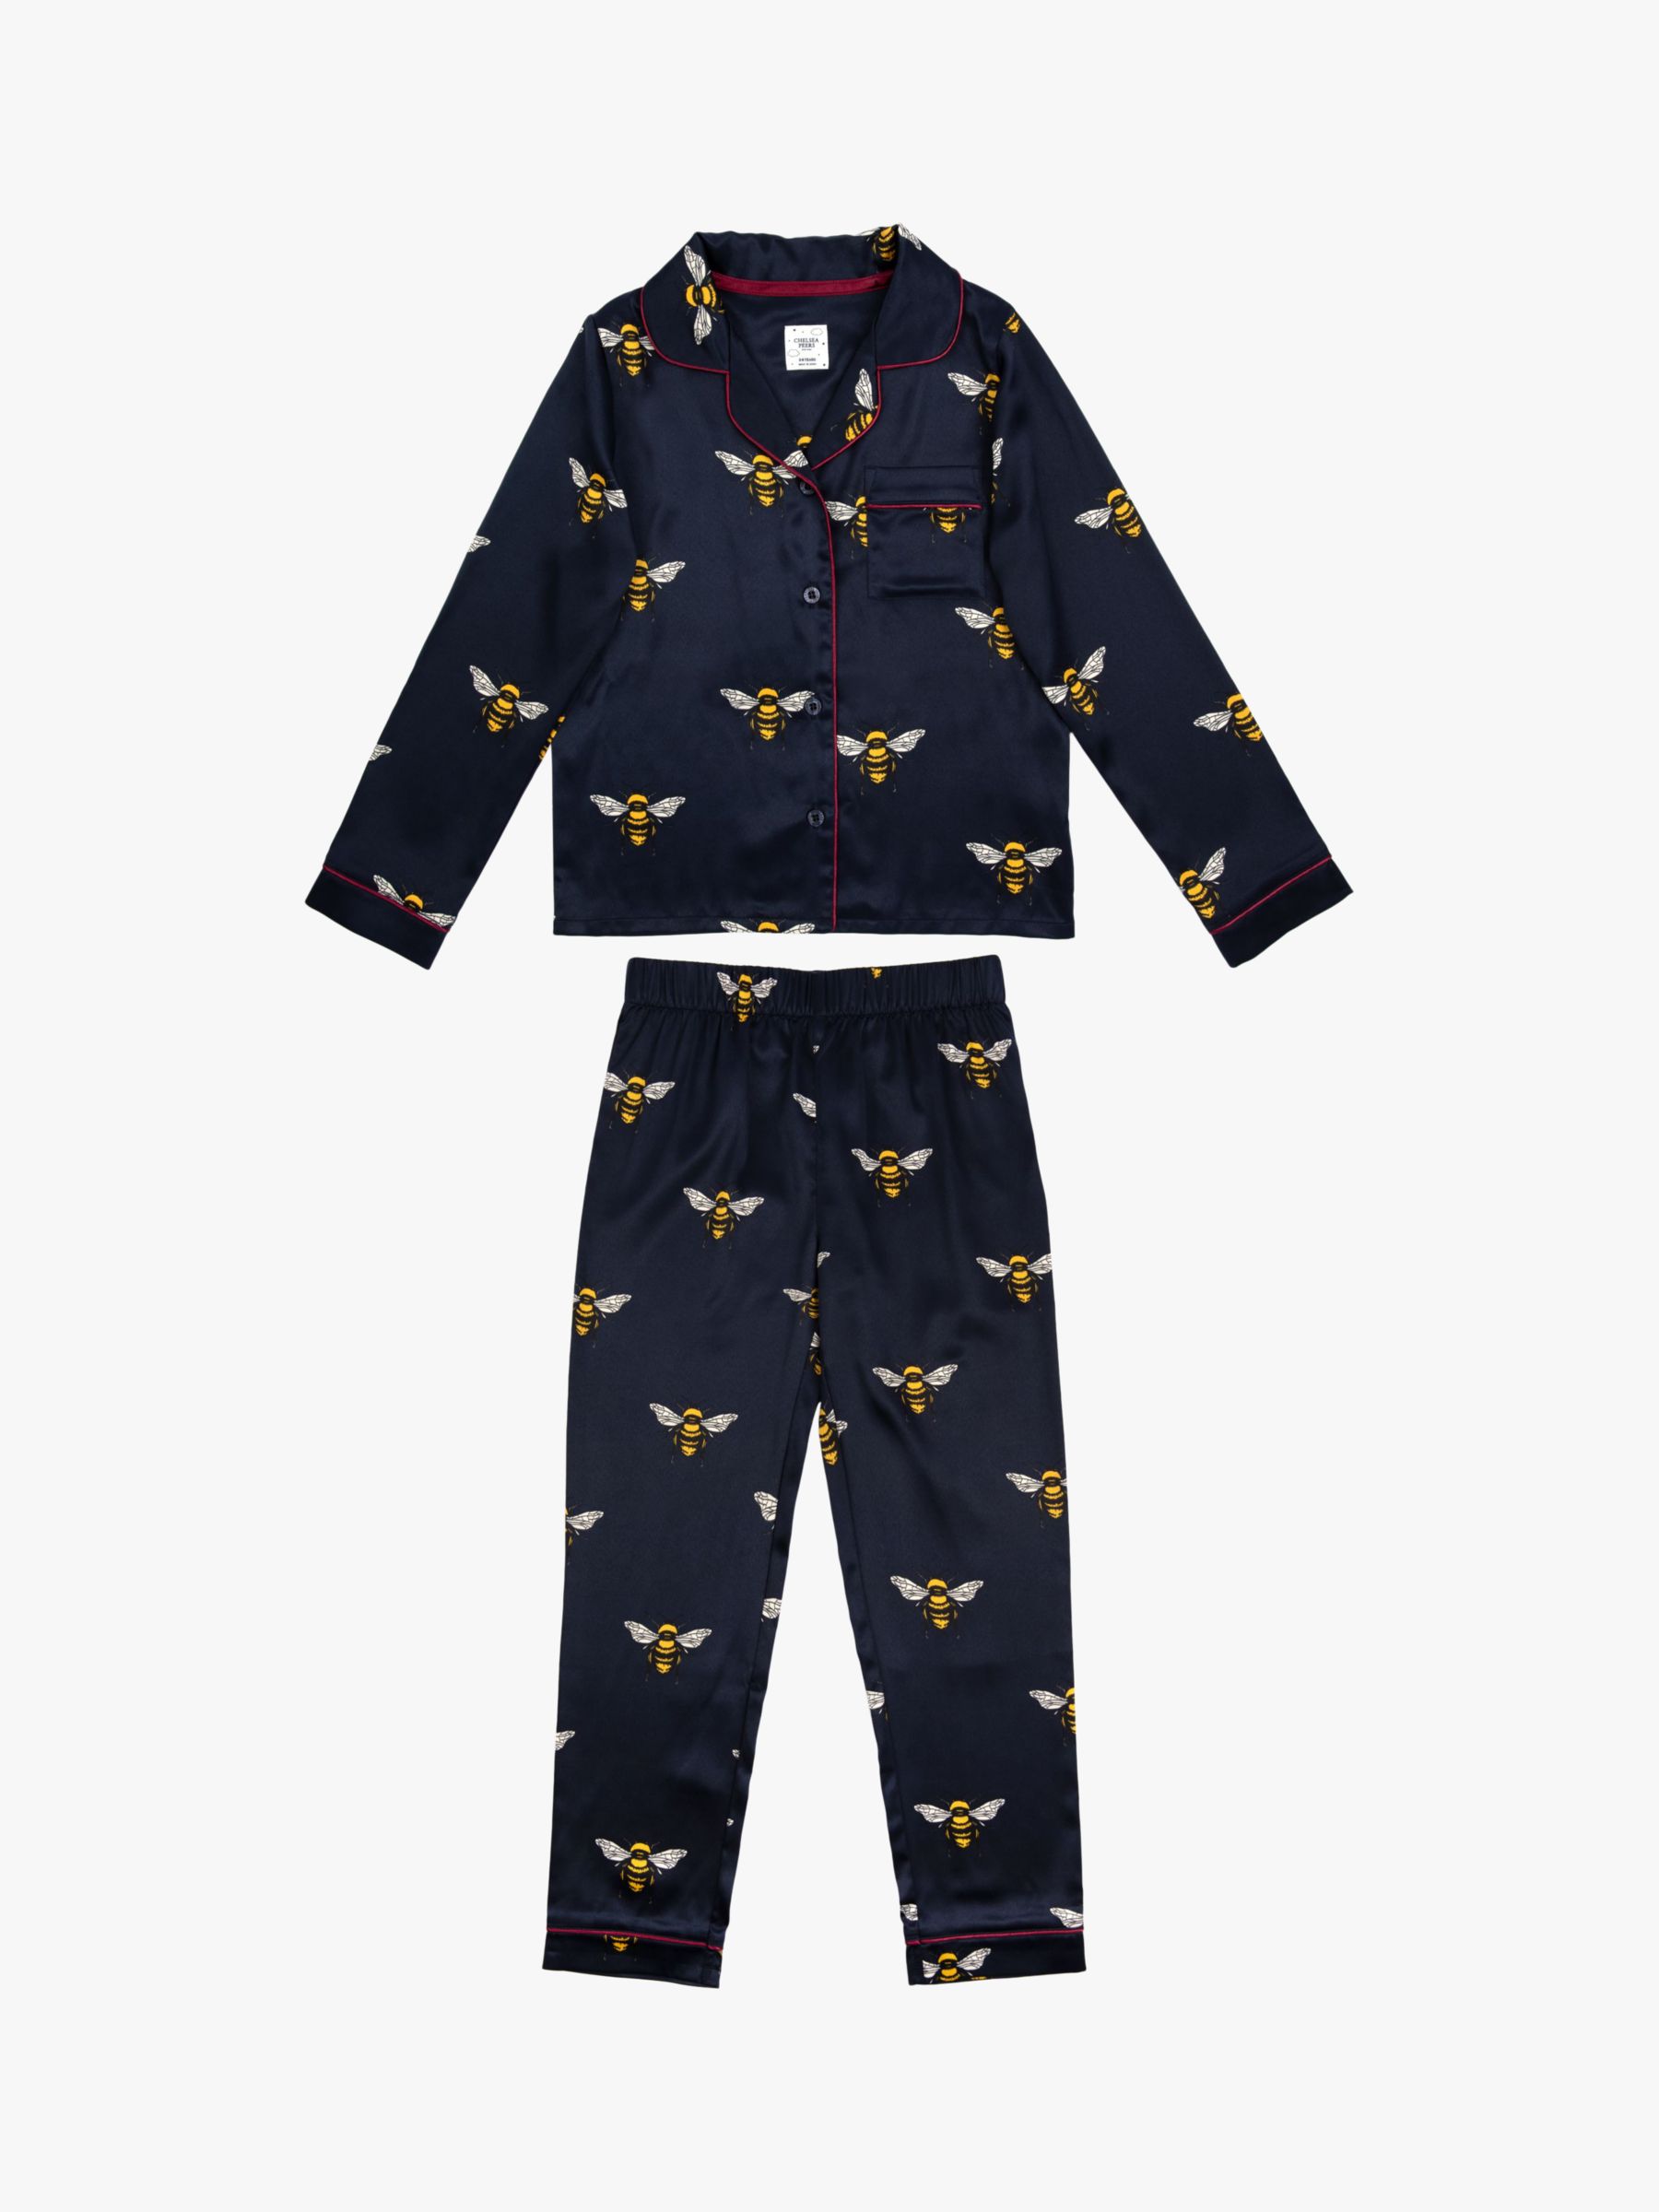 Chelsea Peers Kids' Satin Bee Shirt Pyjama Set, Navy, 1-2 years